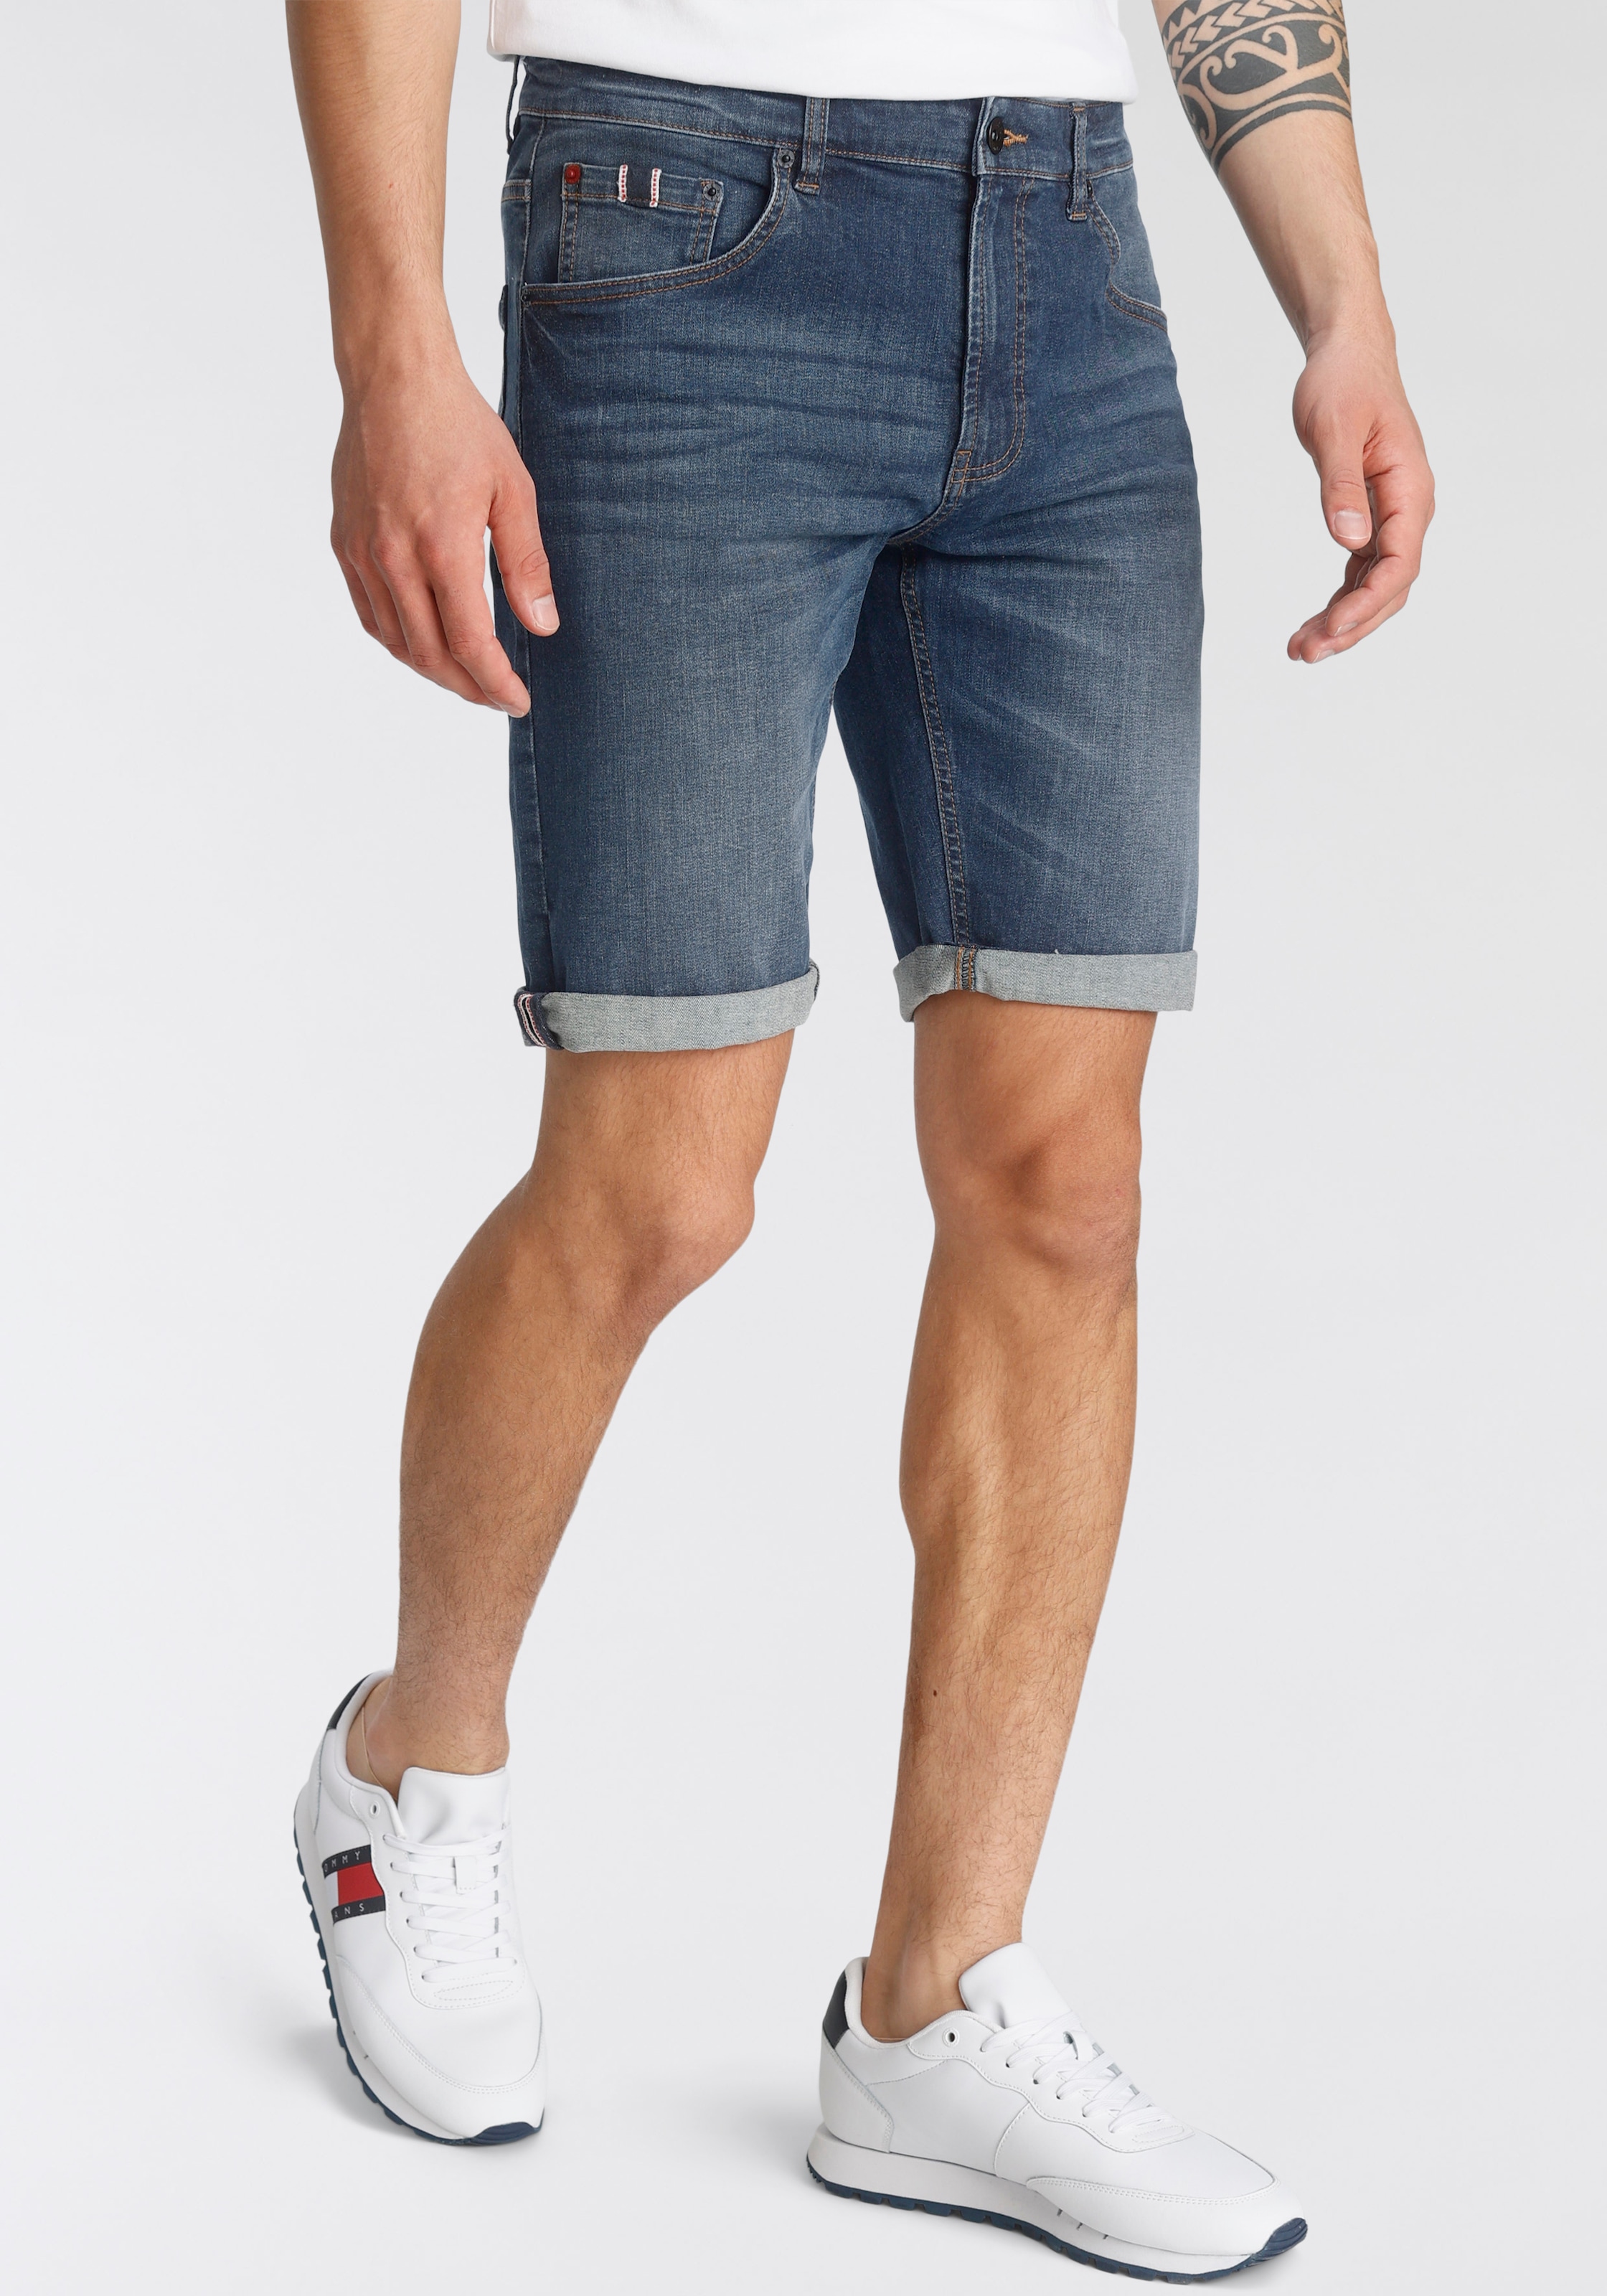 jetzt Shorts shoppen online aktuelle Modetrends - Jeans